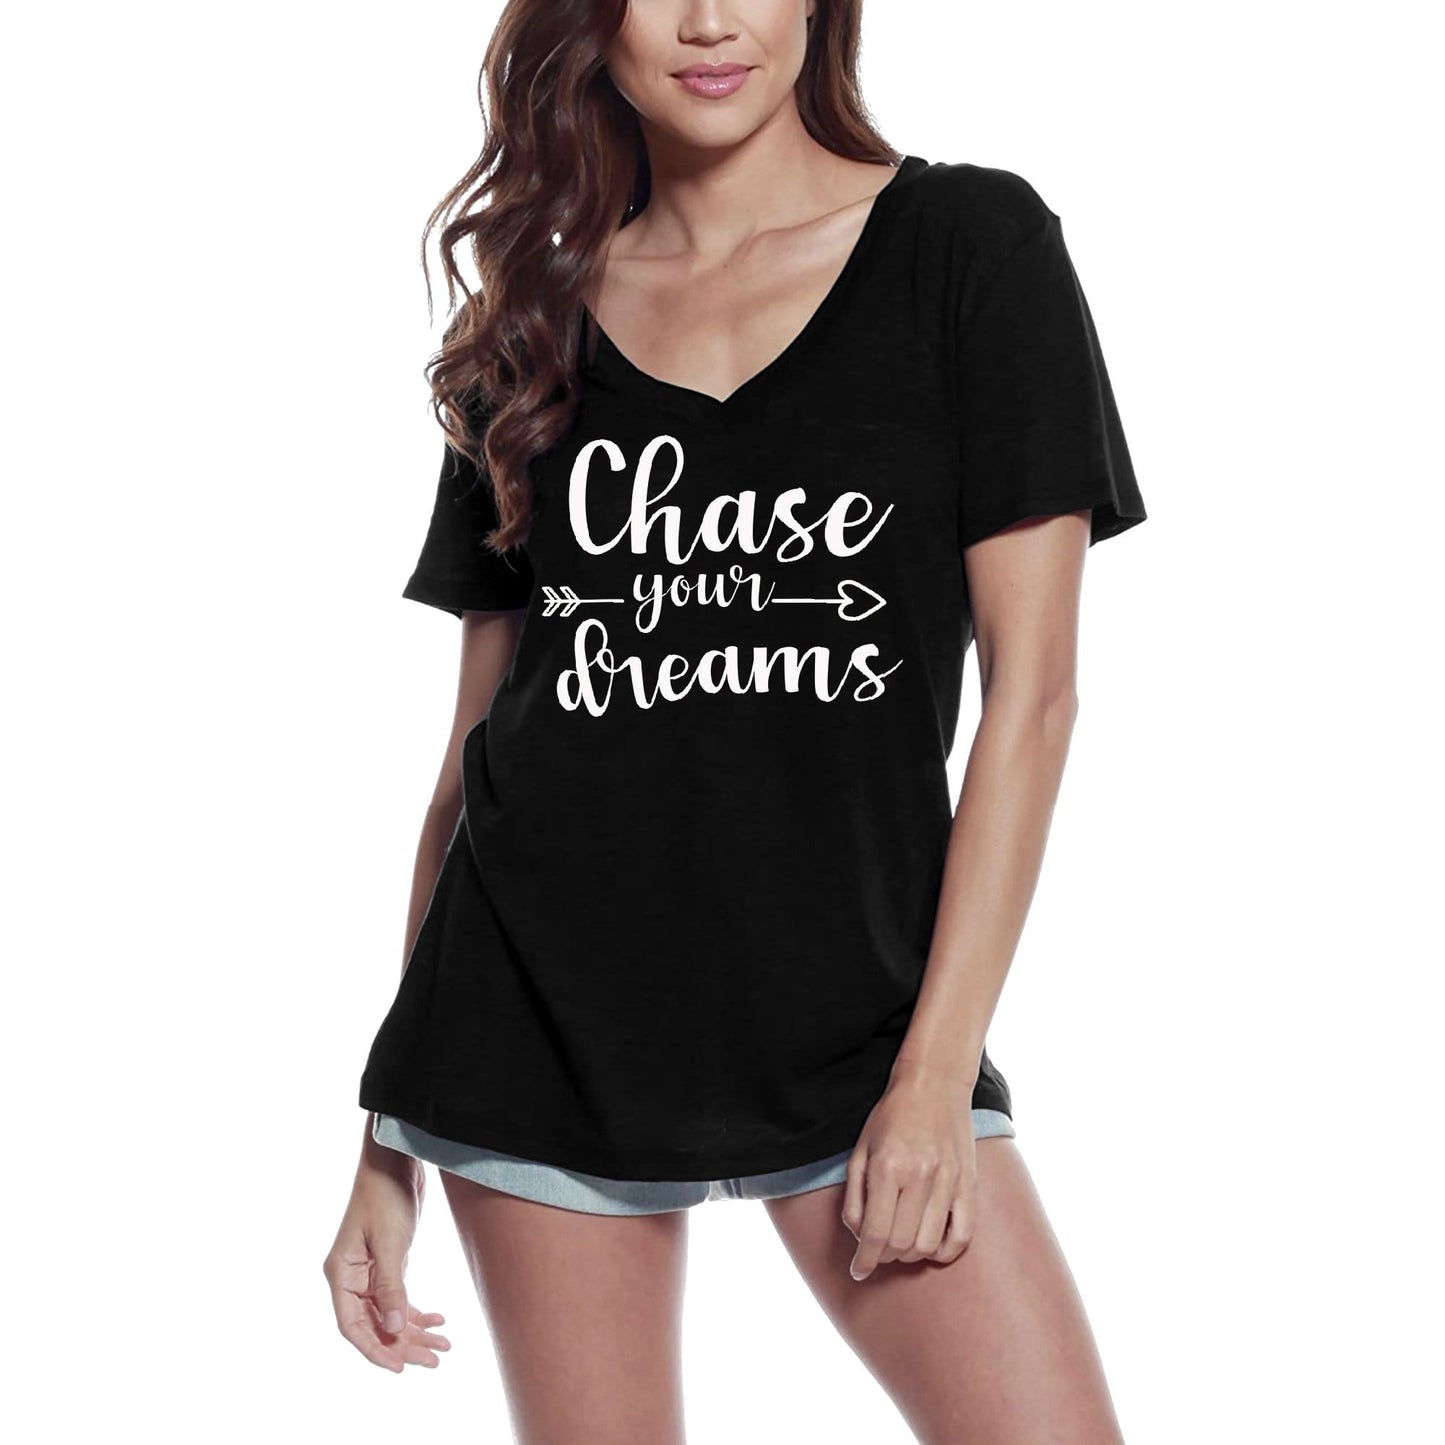 ULTRABASIC Women's V-Neck T-Shirt Chase Your Dreams - Short Sleeve Tee Shirt Gift Tops